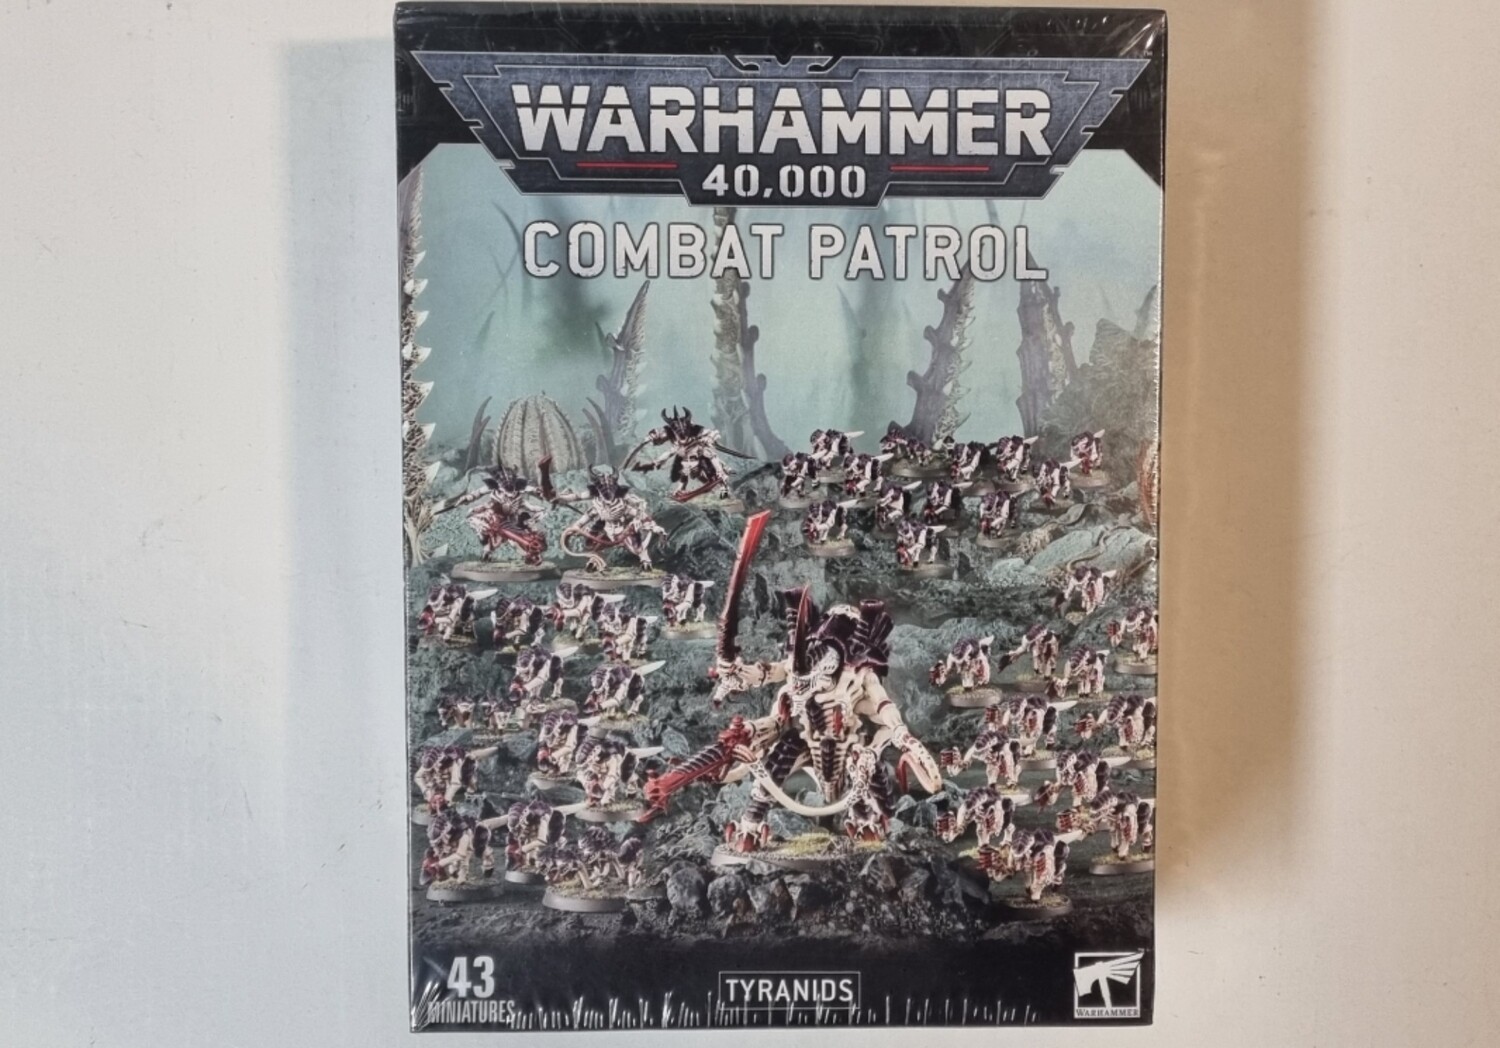 Warhammer, 40k, 51-03, Combat Patrol: Tyranids